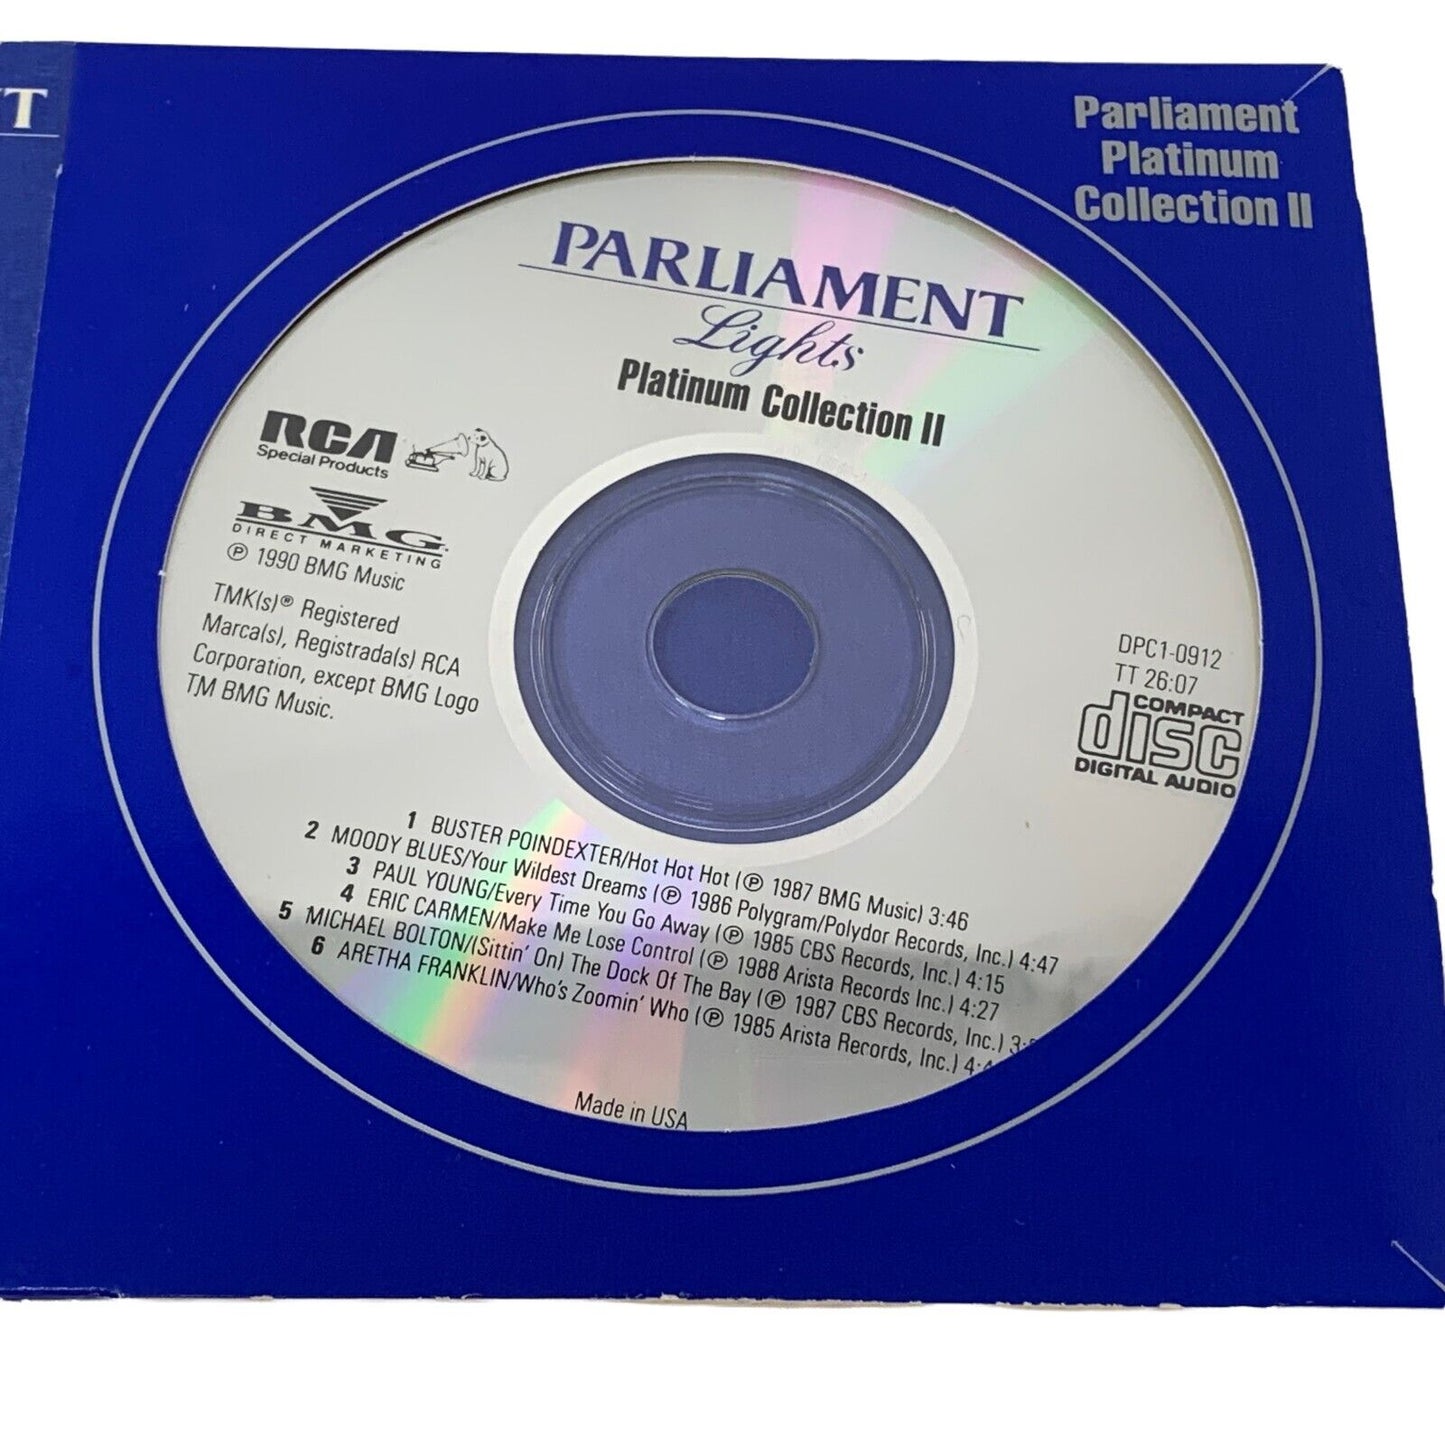 Parliament Lights Cigarettes CD Vintage 90s Compact Disc Philip Morris Giveaway